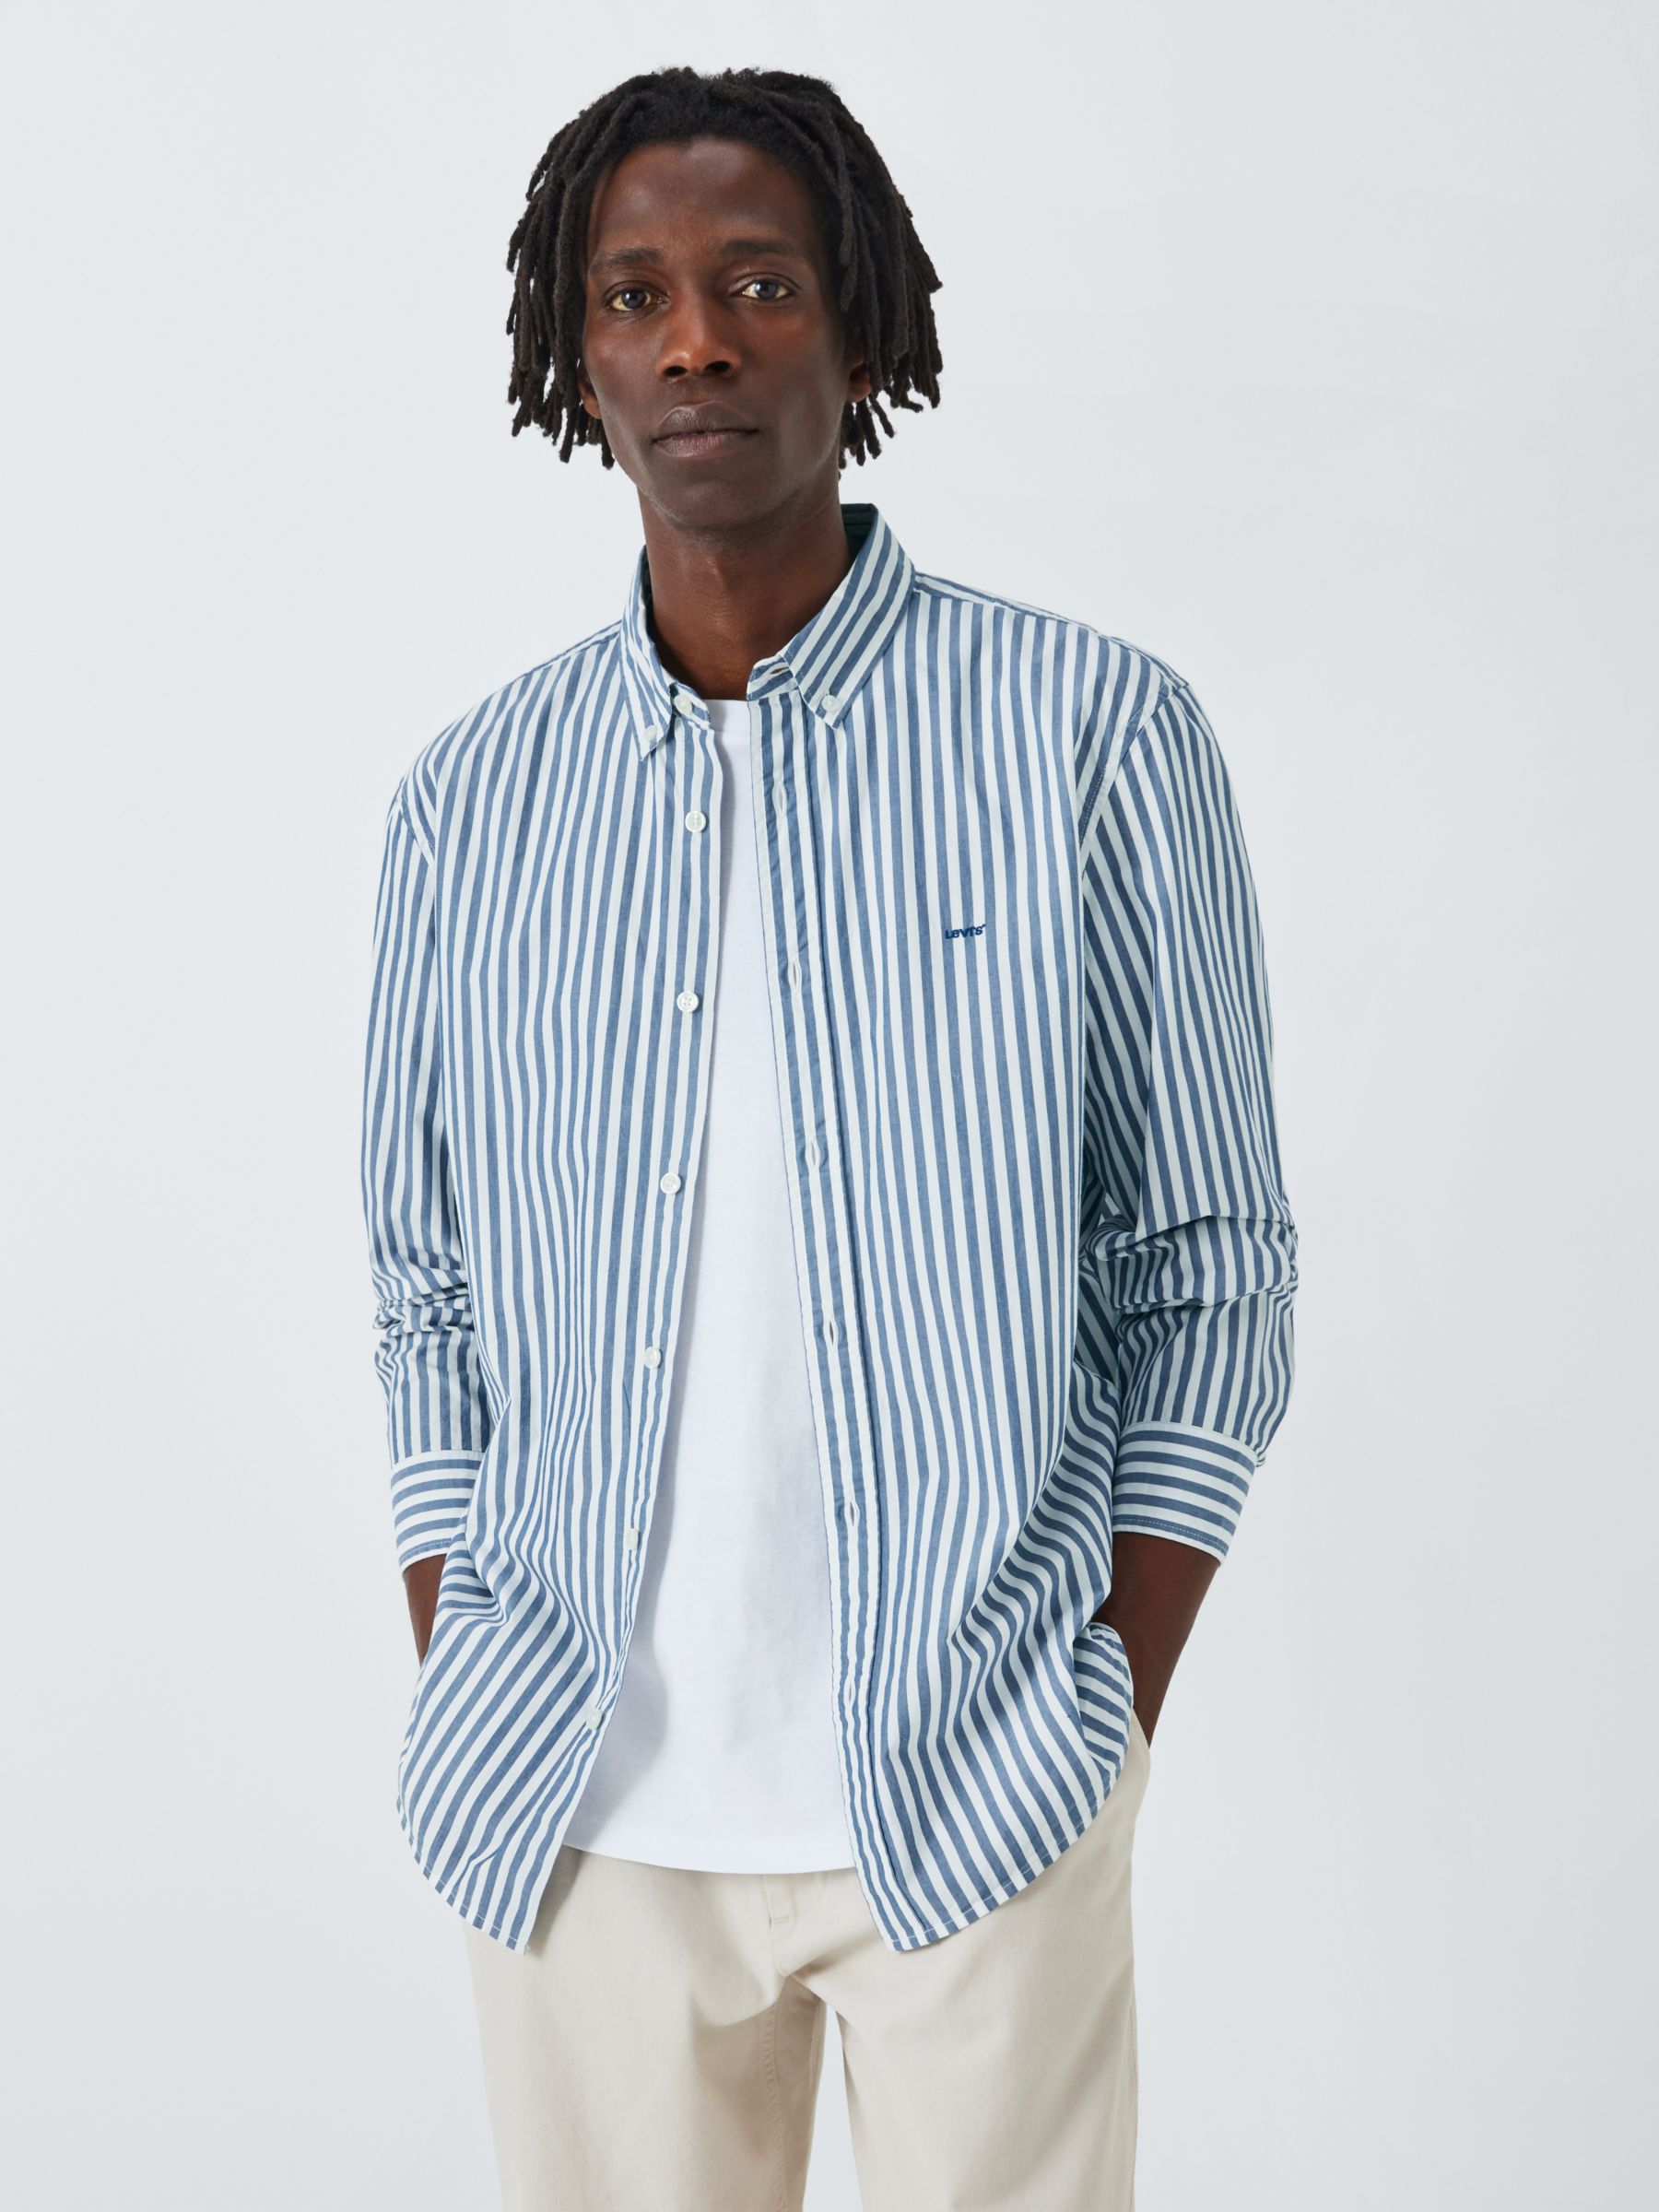 Levi's Authentic Striped Cotton Shirt, Blue/White at John Lewis & Partners